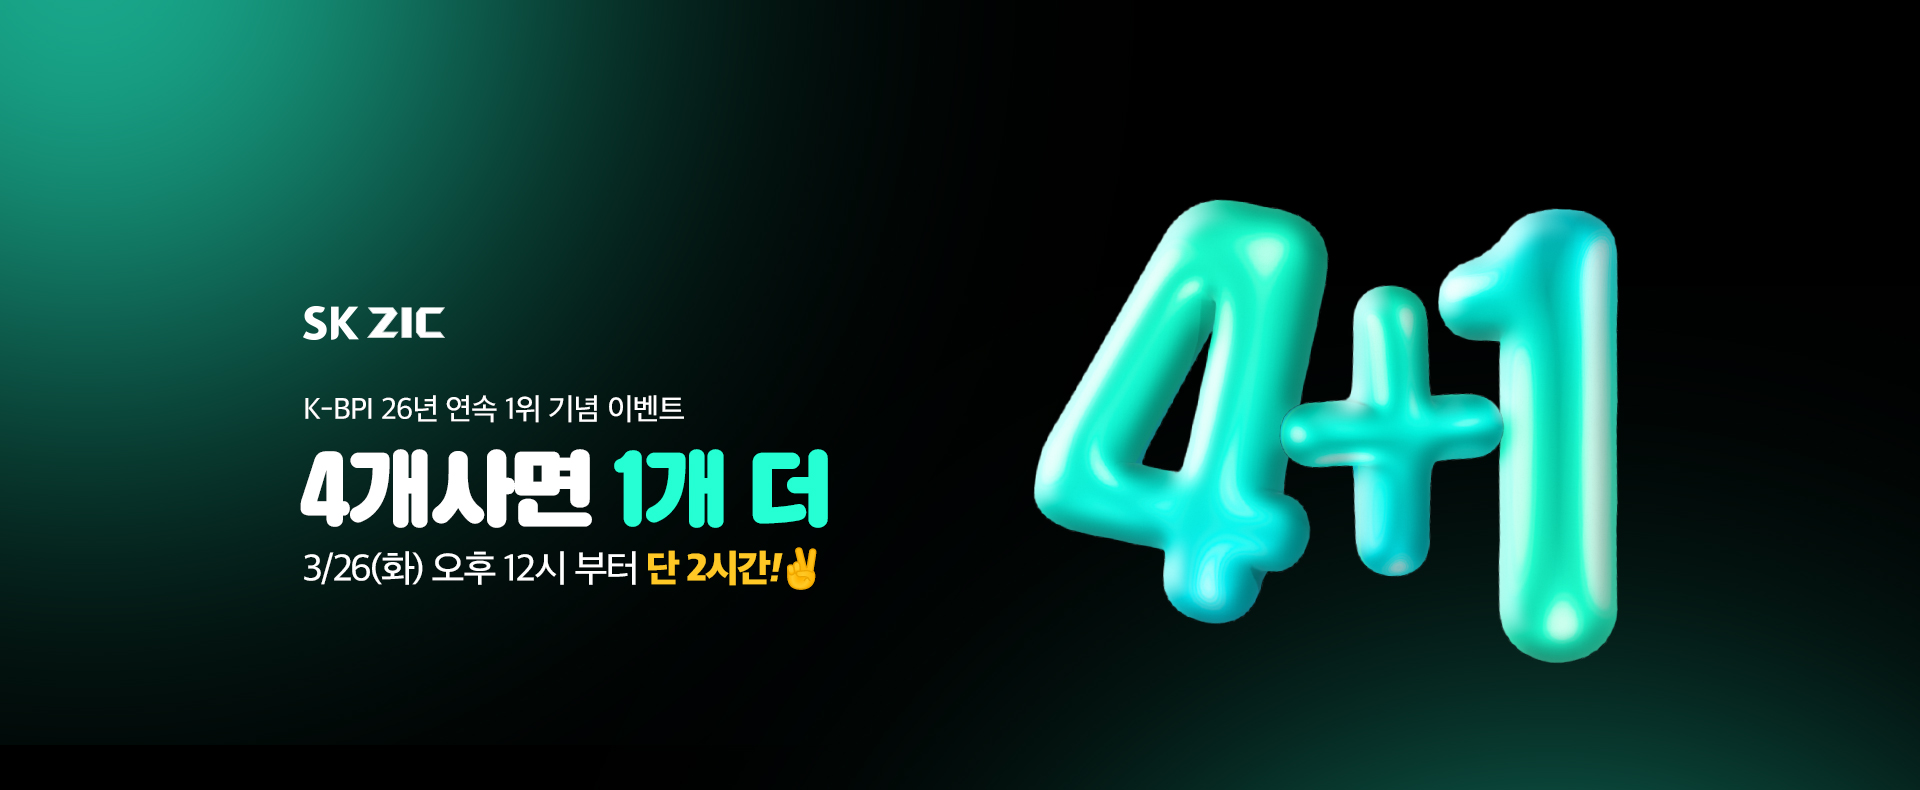 ZIC K-BPI 26년 연속 1위 선정 기념 온라인 쇼핑몰 4+1 구매 이벤트, SK이노베이션, SK엔무브, SK ZIC, 지크(2)